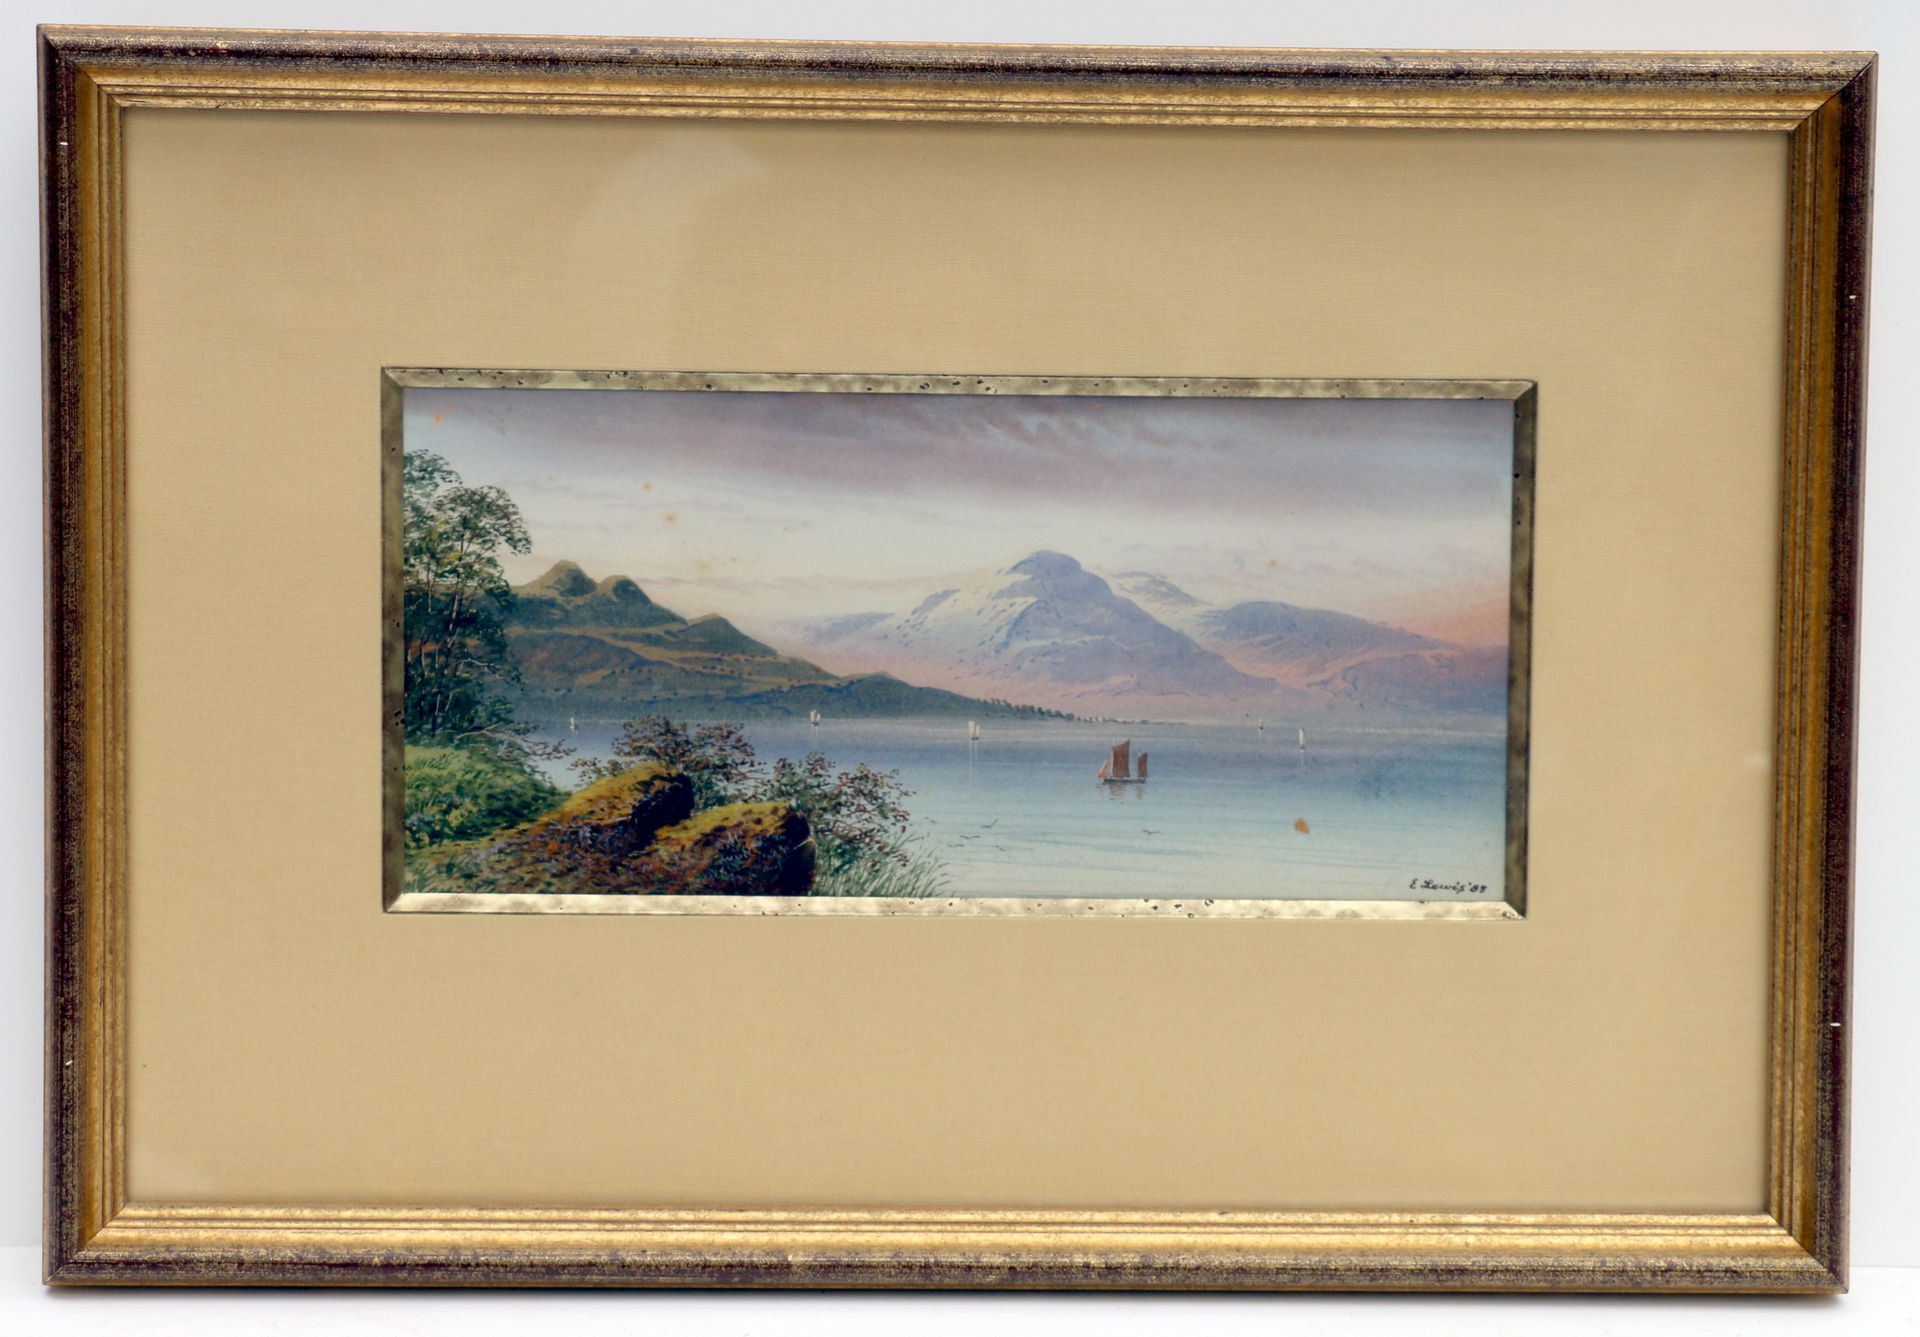 Null Edmund Darch LEWIS (1835-1910) (?) "湖 "水彩画Sbd，日期为88年。高12 x 26厘米